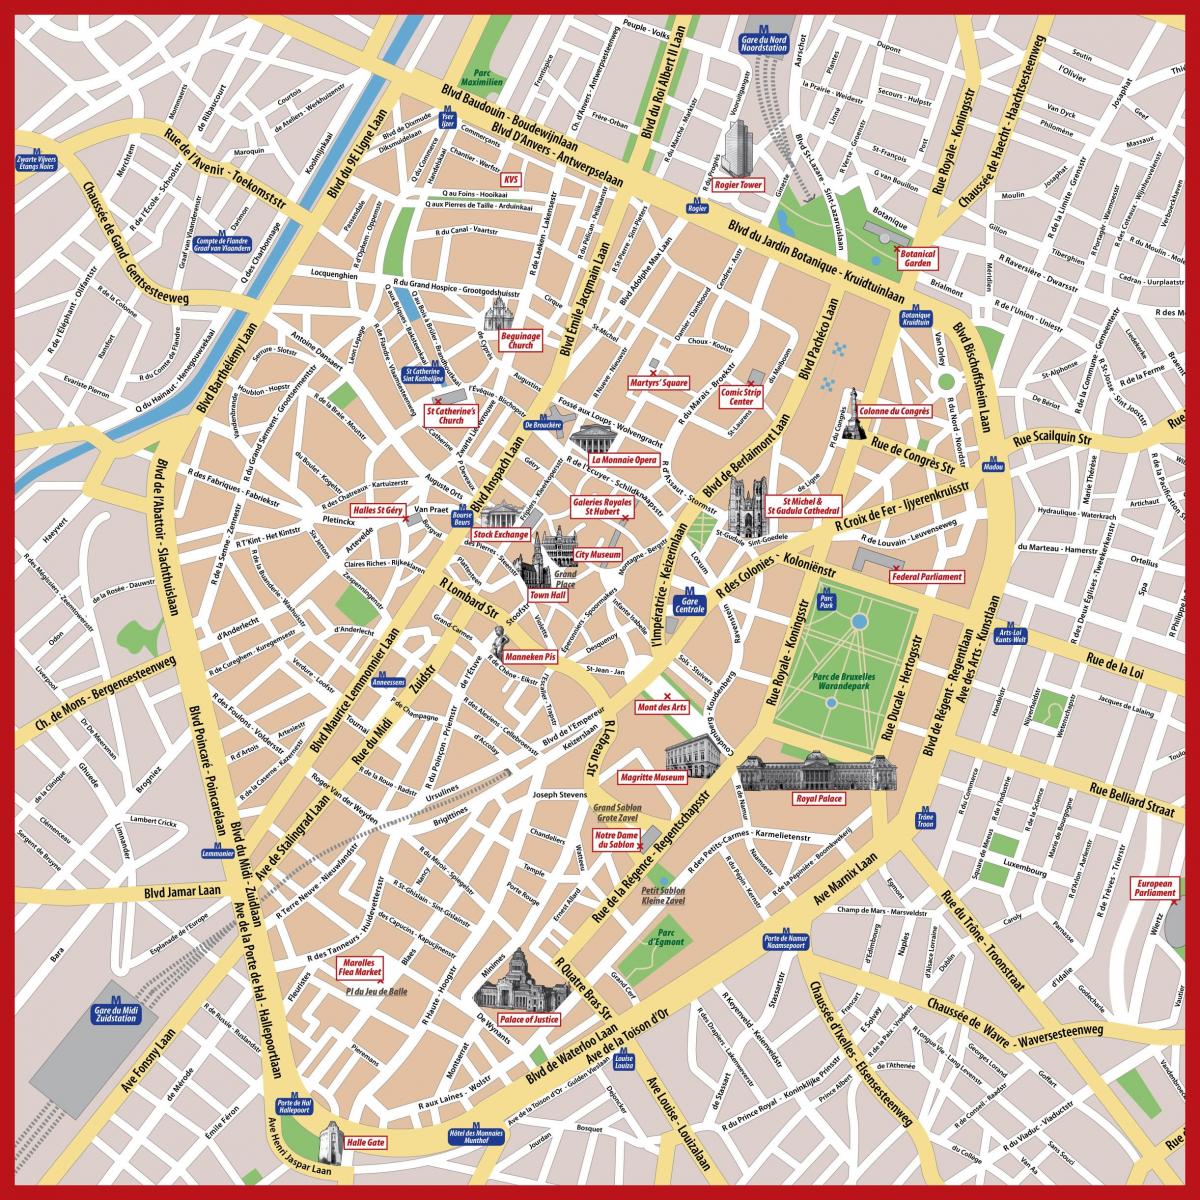 Brussel plattegrond